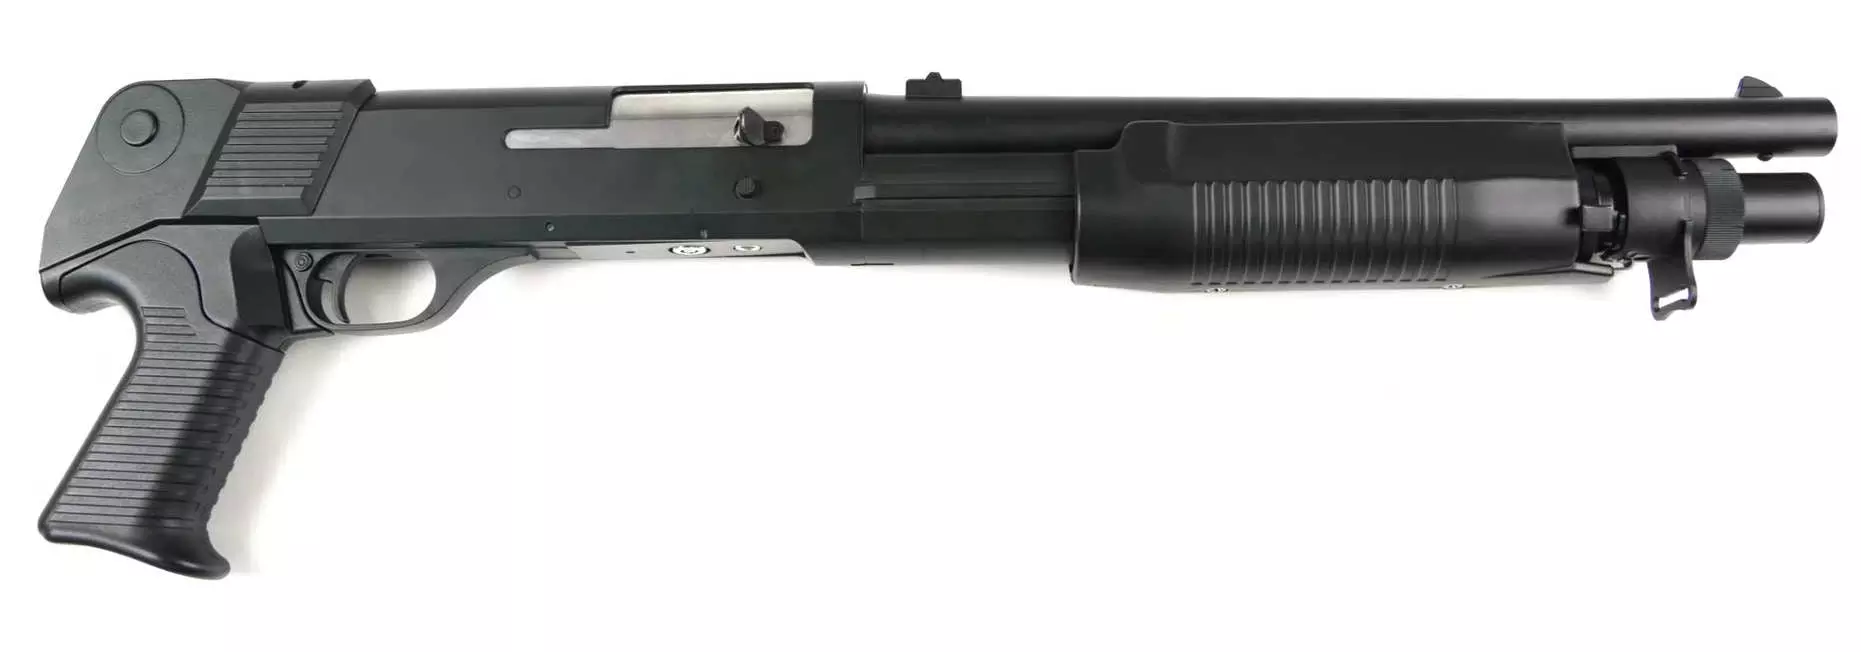 Laser-tag-shotgun-Benelli-M3-side.jpg